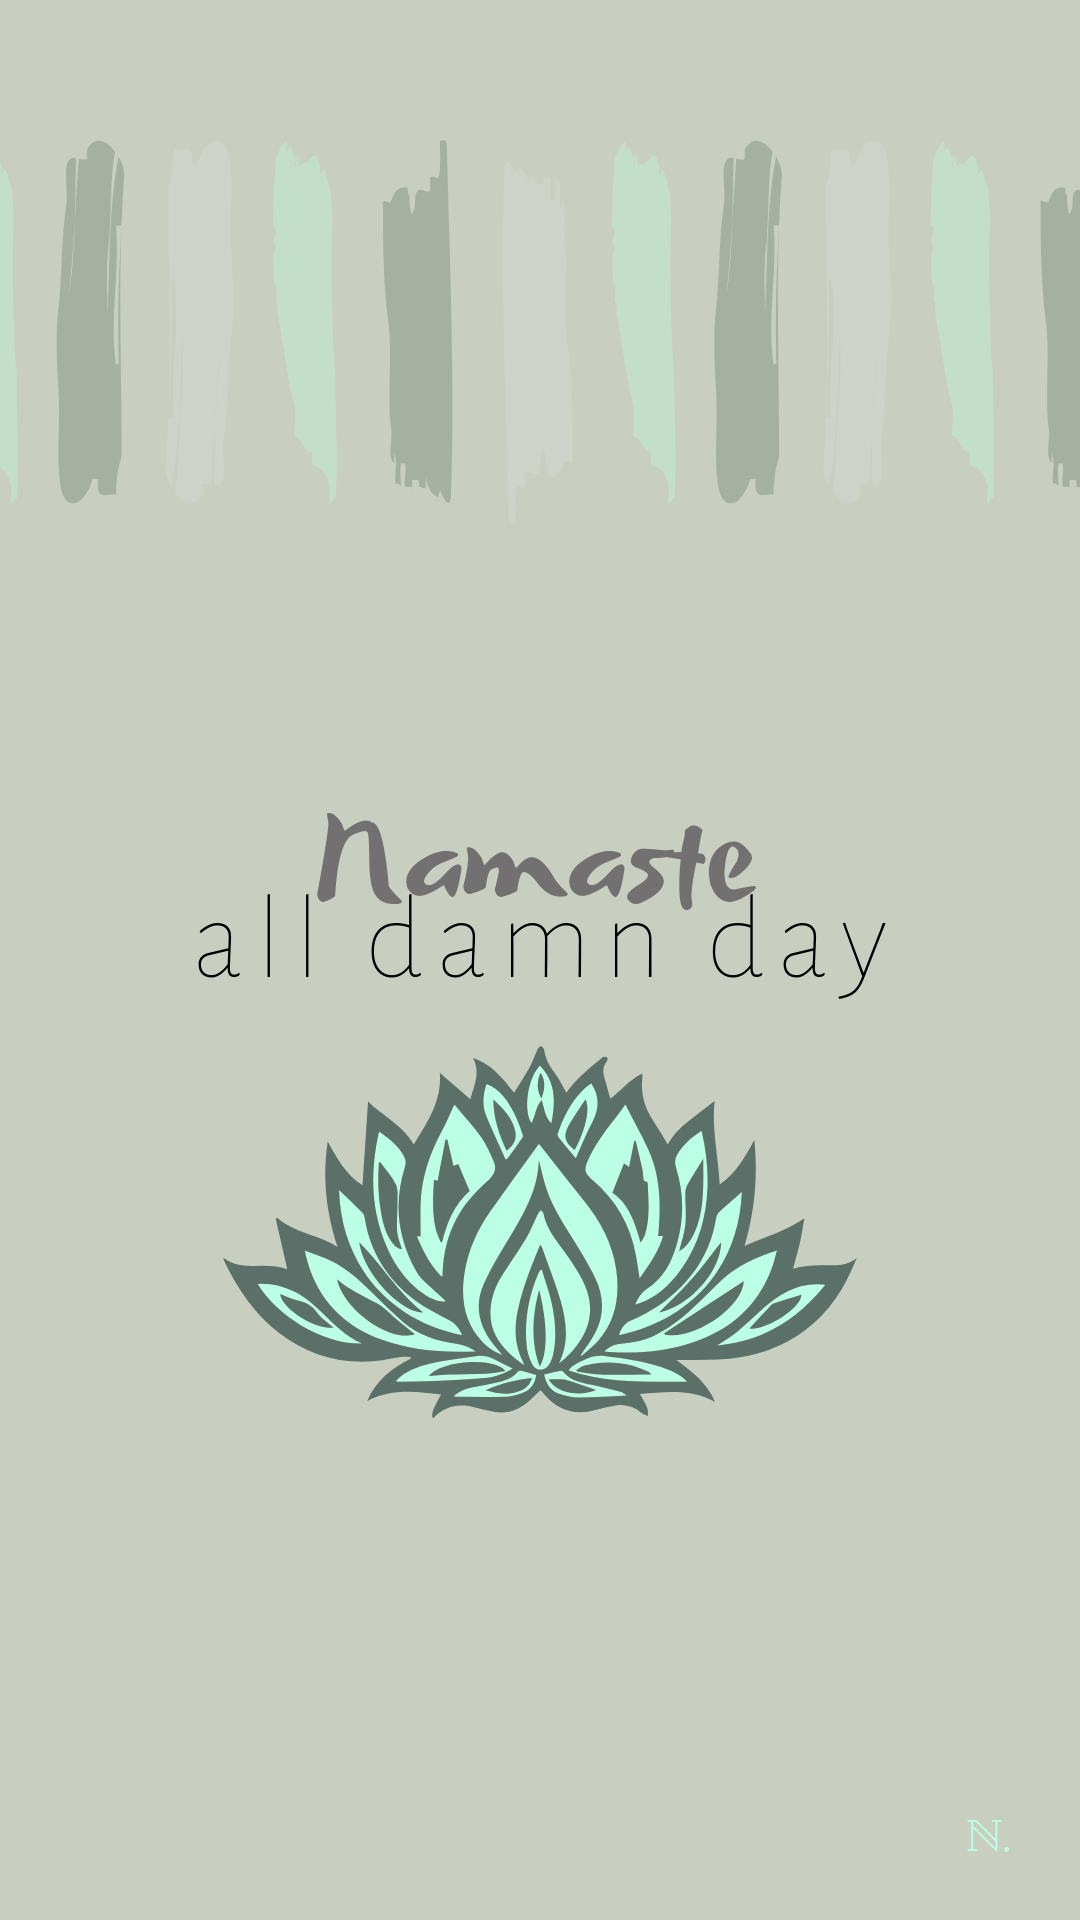 25+] Namaste Desktop Wallpapers - WallpaperSafari